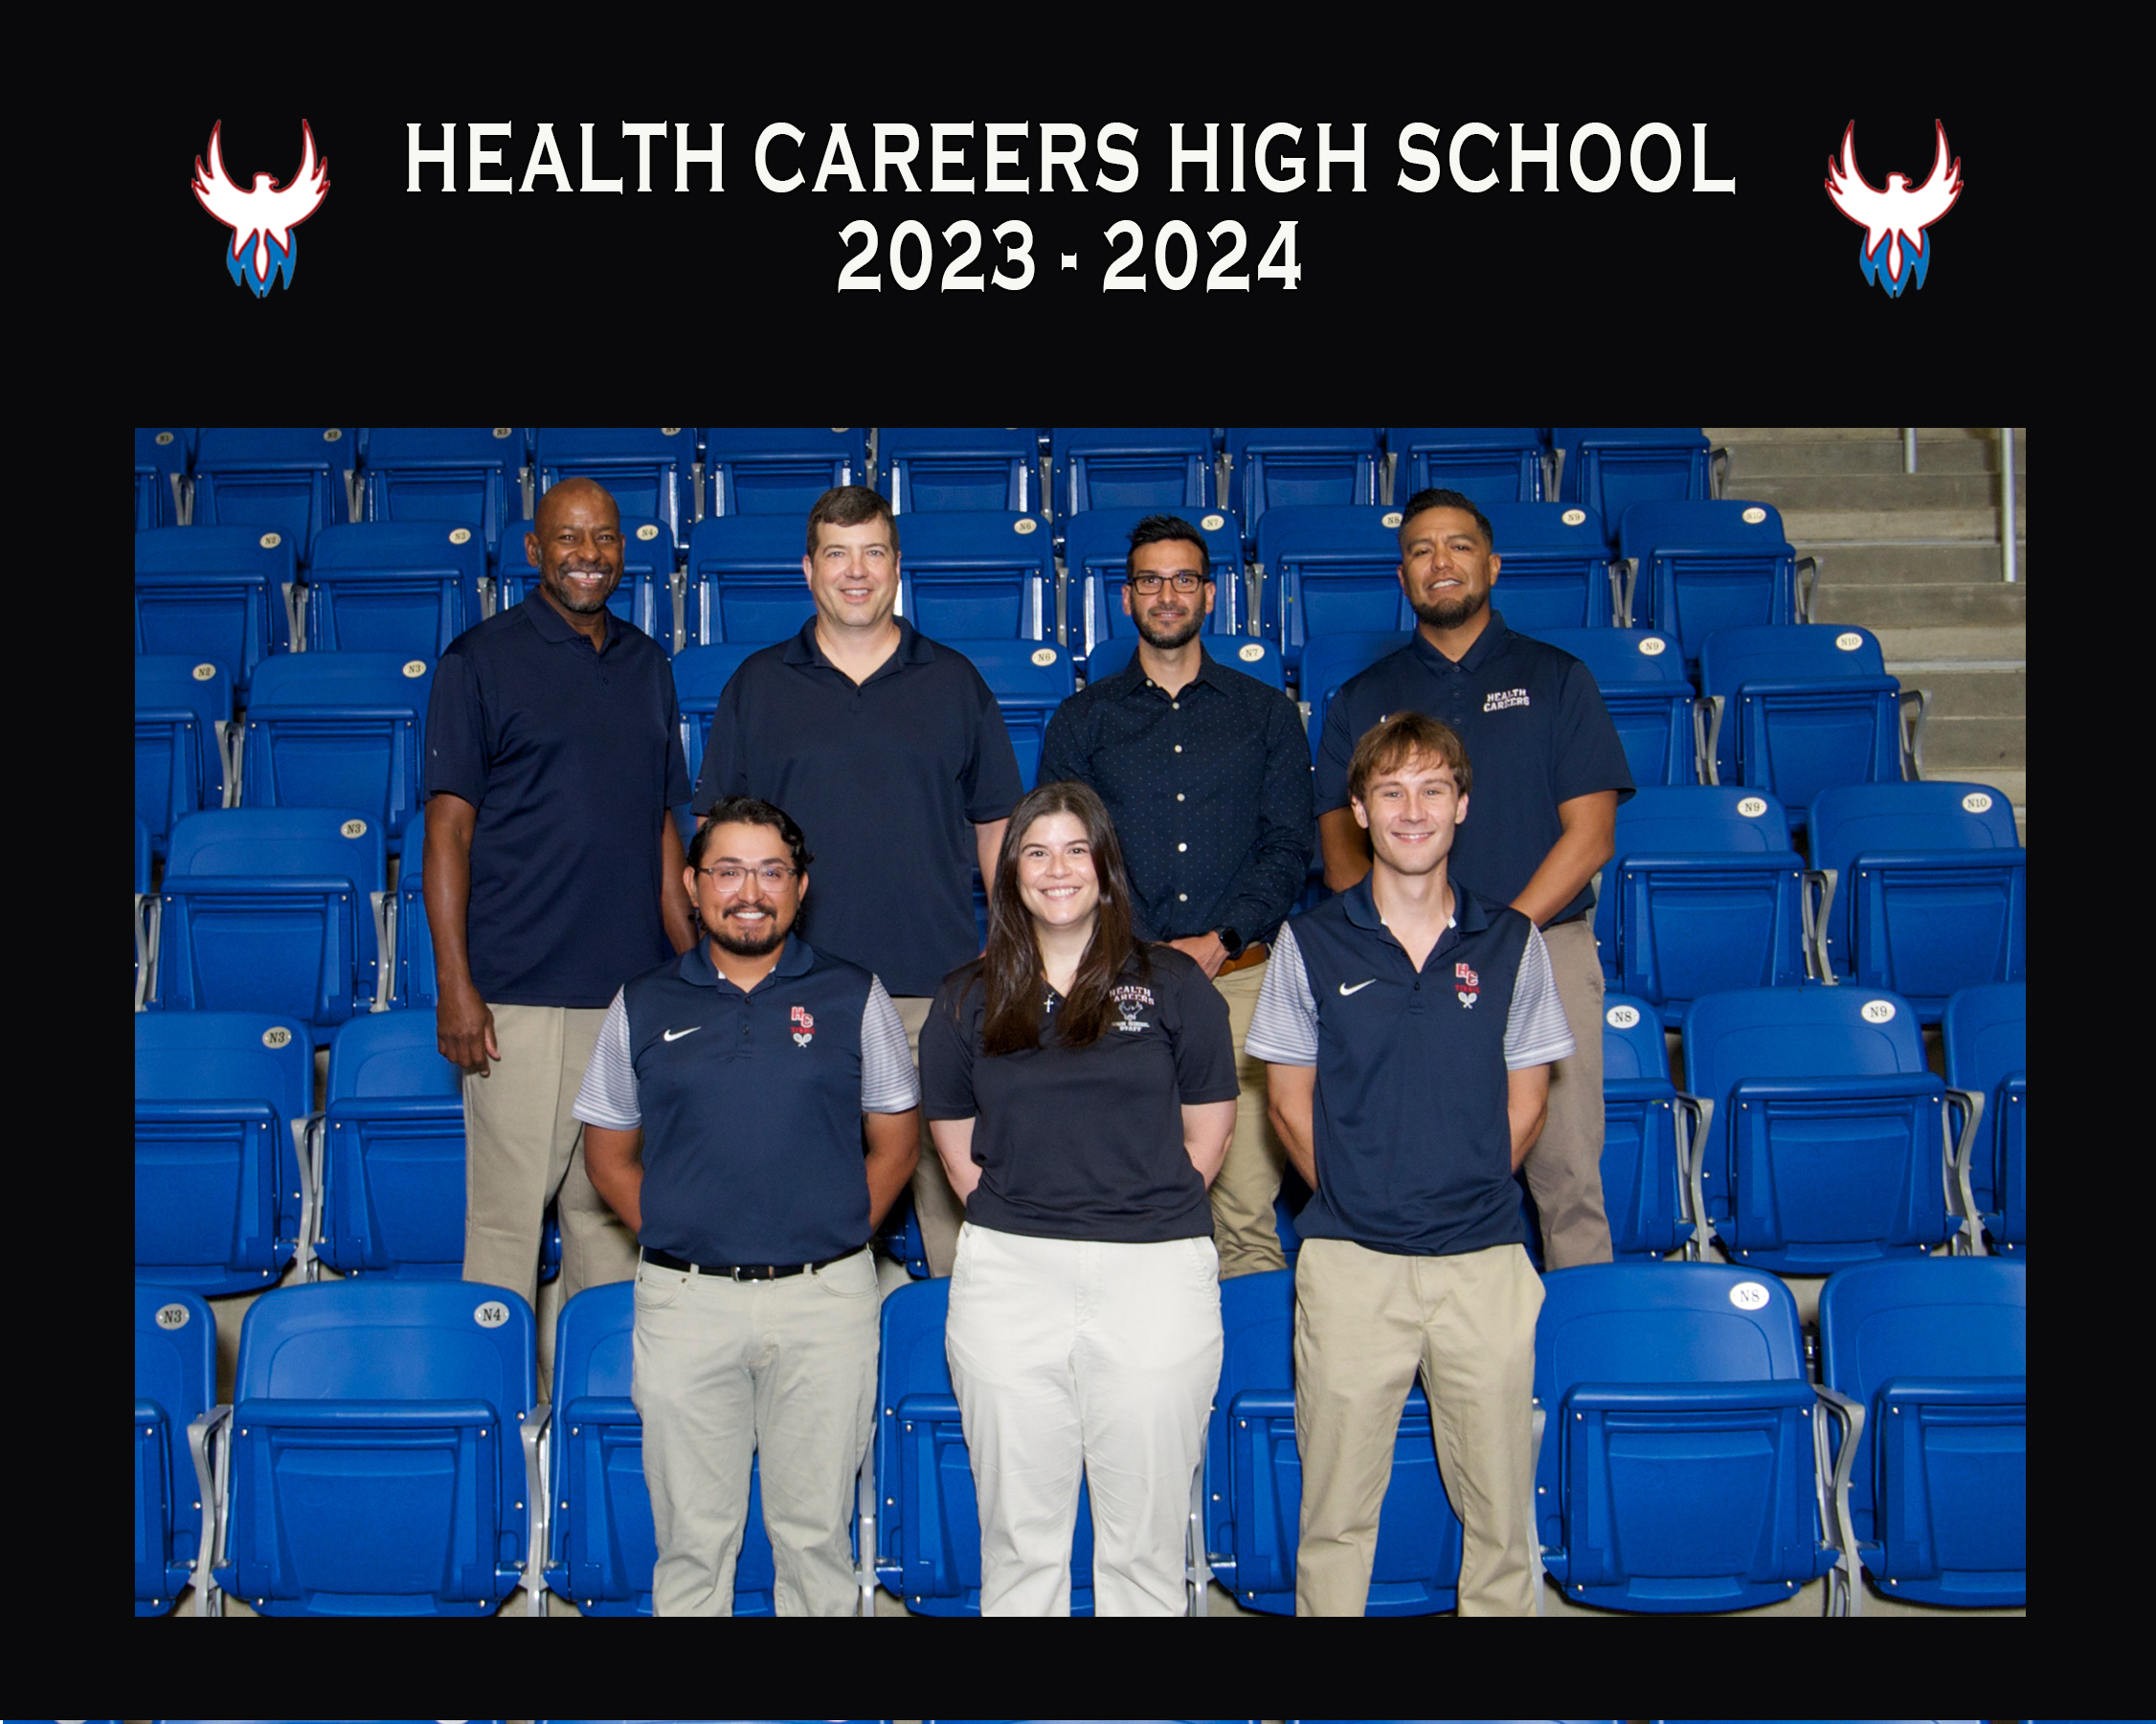 Health Careers Coaching Staff 2023-2024